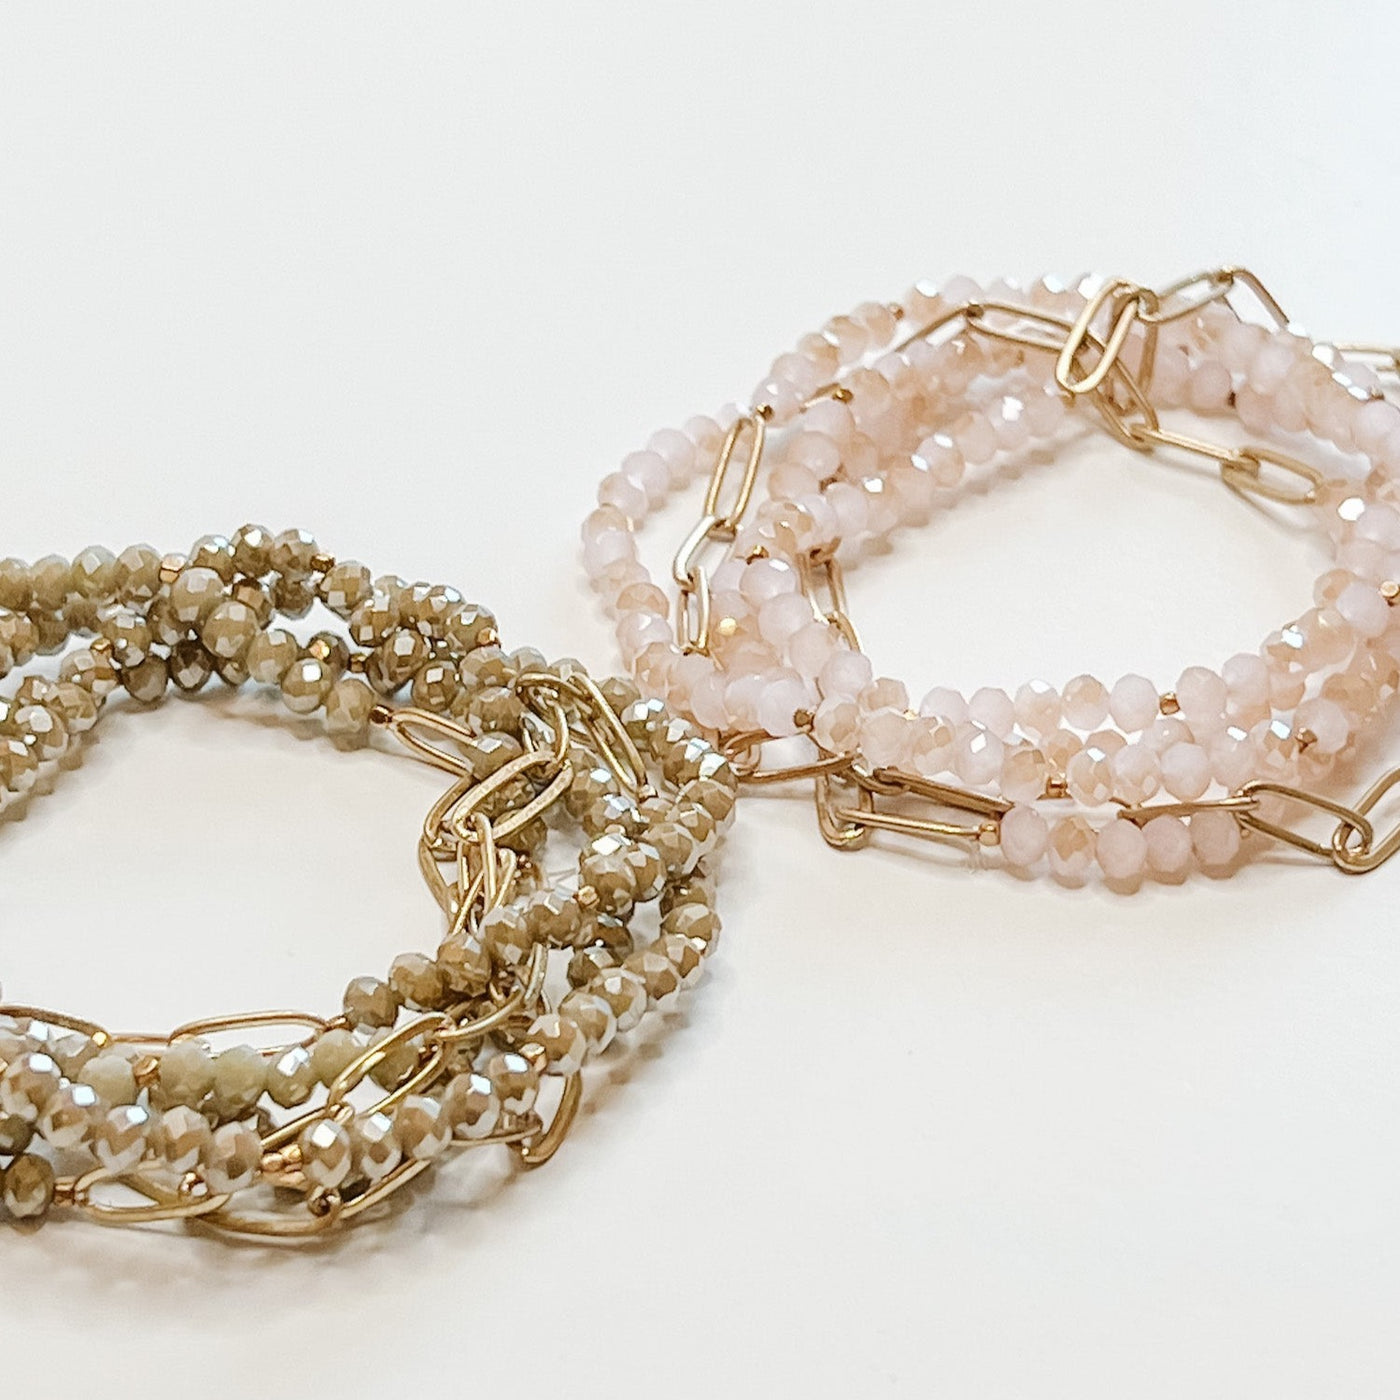 Bracelet, Cade - Danshire Market and Design , neural or pink beaded bracelet with gold chain link detail